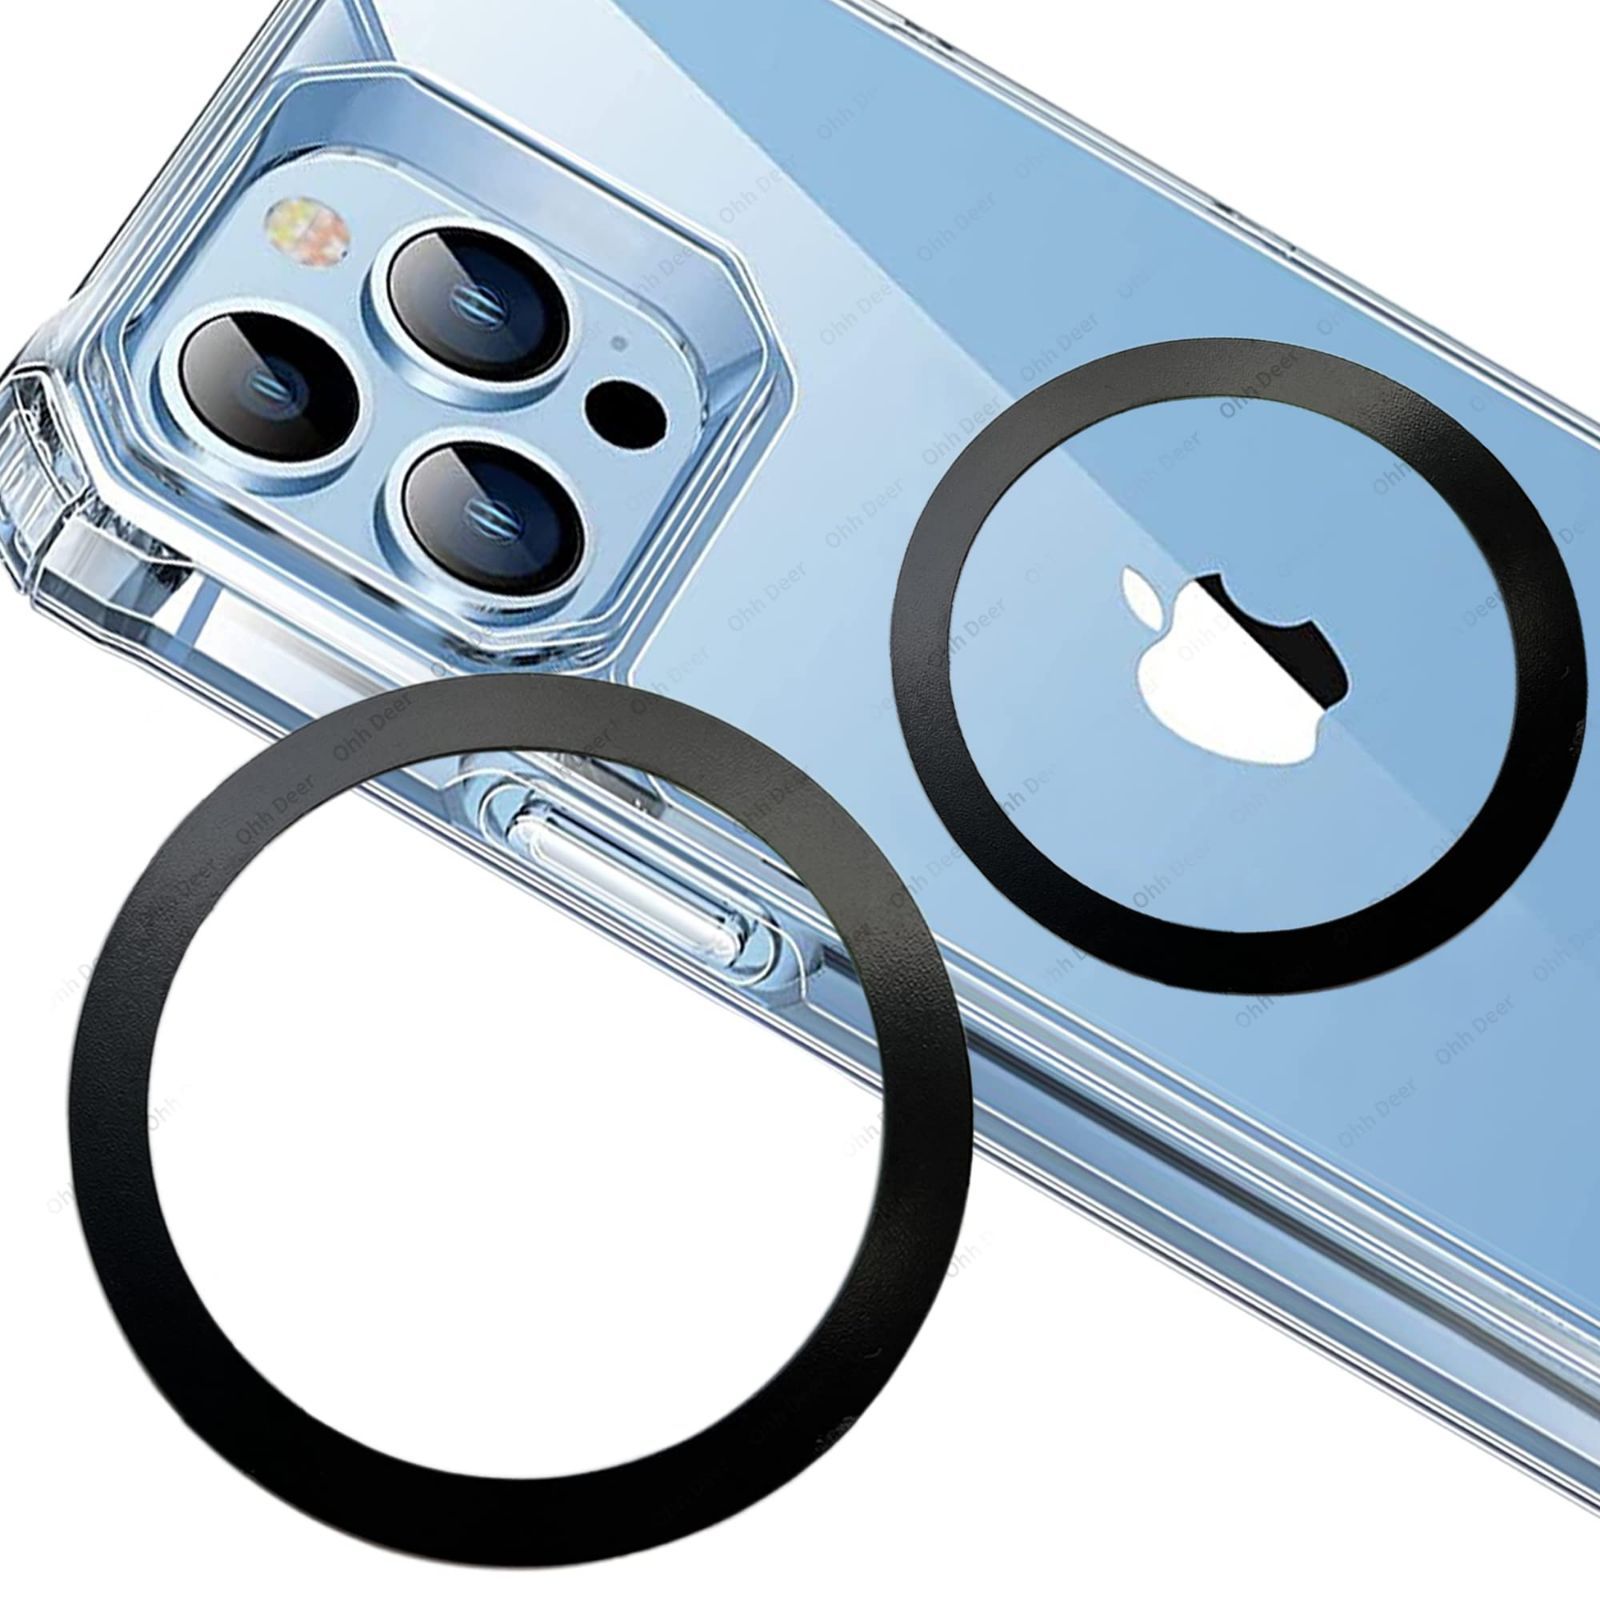 magsafe シール リング 強力 磁石内蔵 iphone ワイヤレス充電 MagSafe充電 メタルリング スマホ マグセーフ 2枚セット